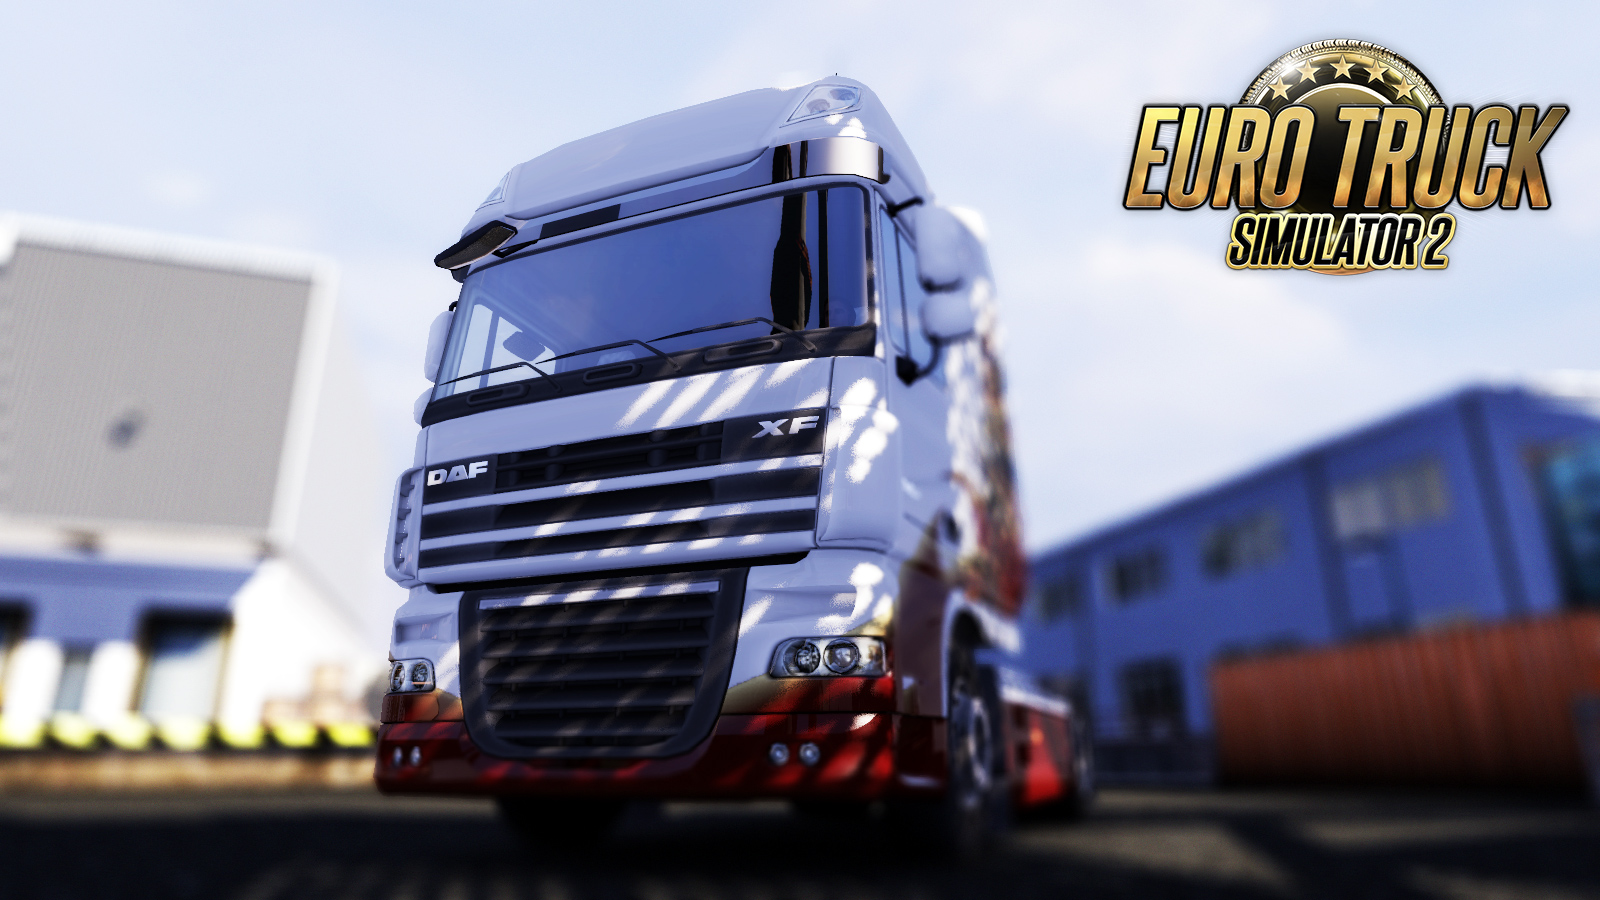 Just Flight - Euro Truck Simulator 2 Gold